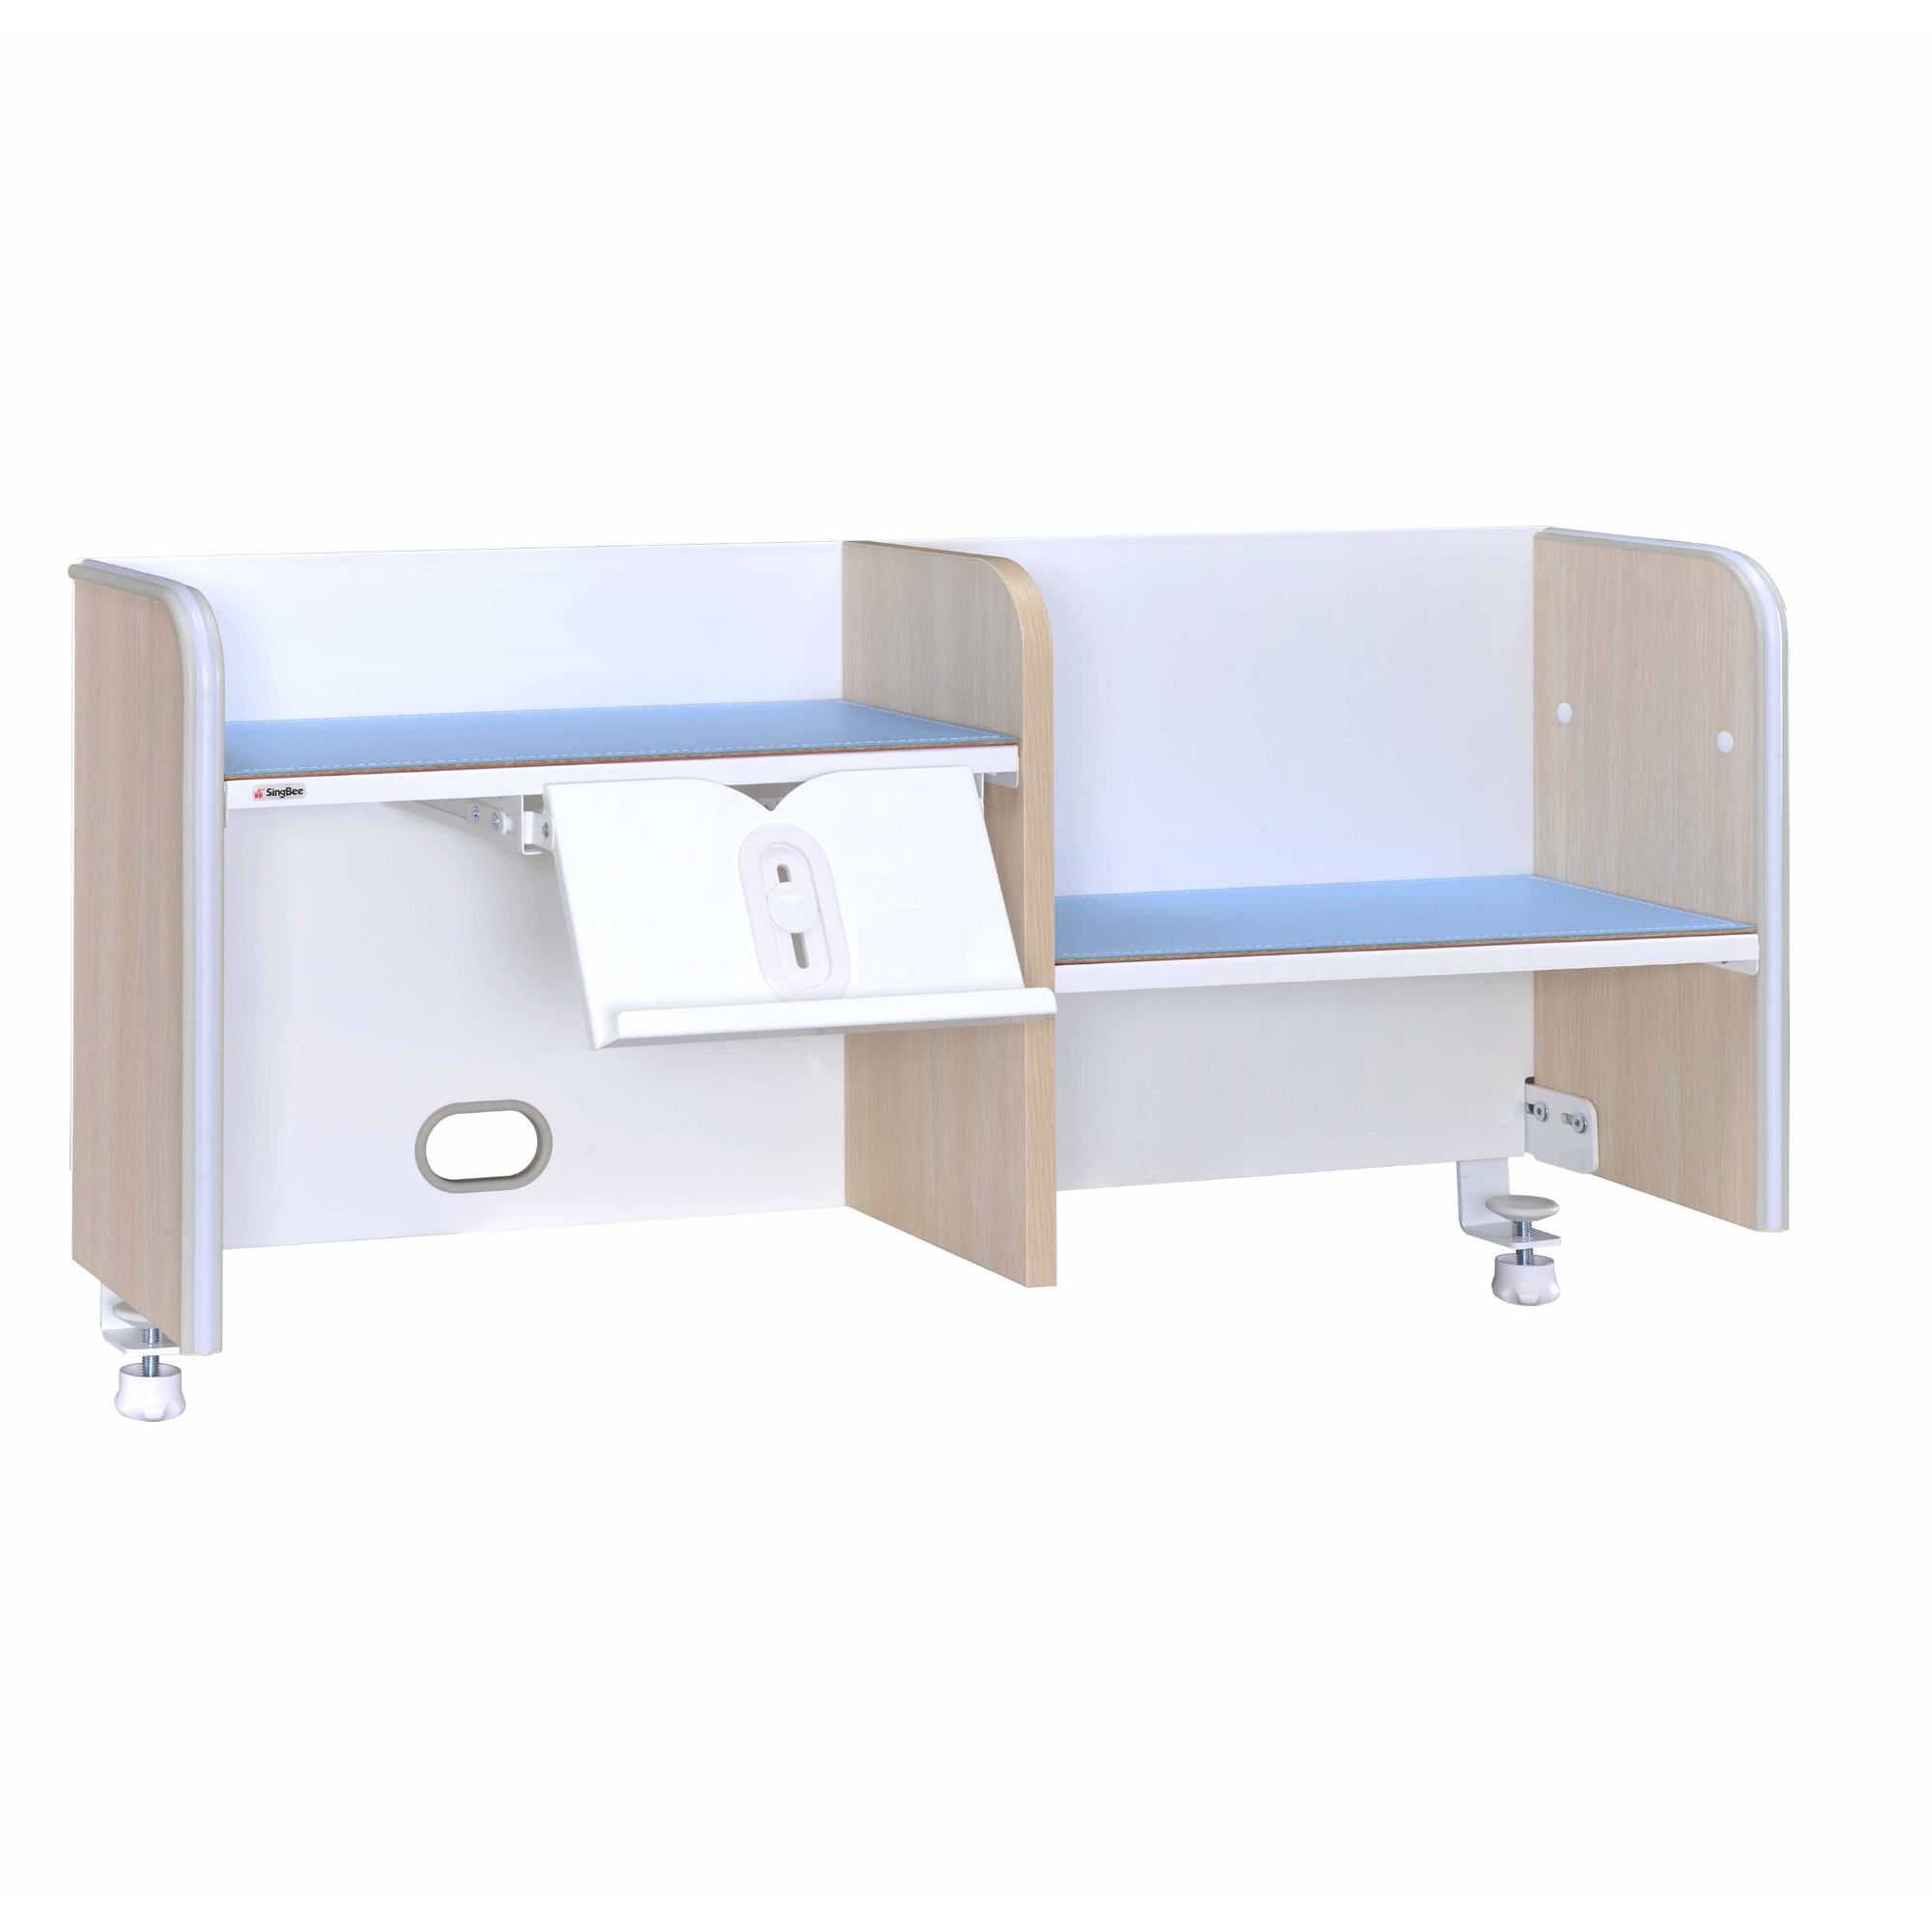 SBC-612 Bookshelf for 41 inch Kids Desk, Organizer Rack - Furniture.Agency